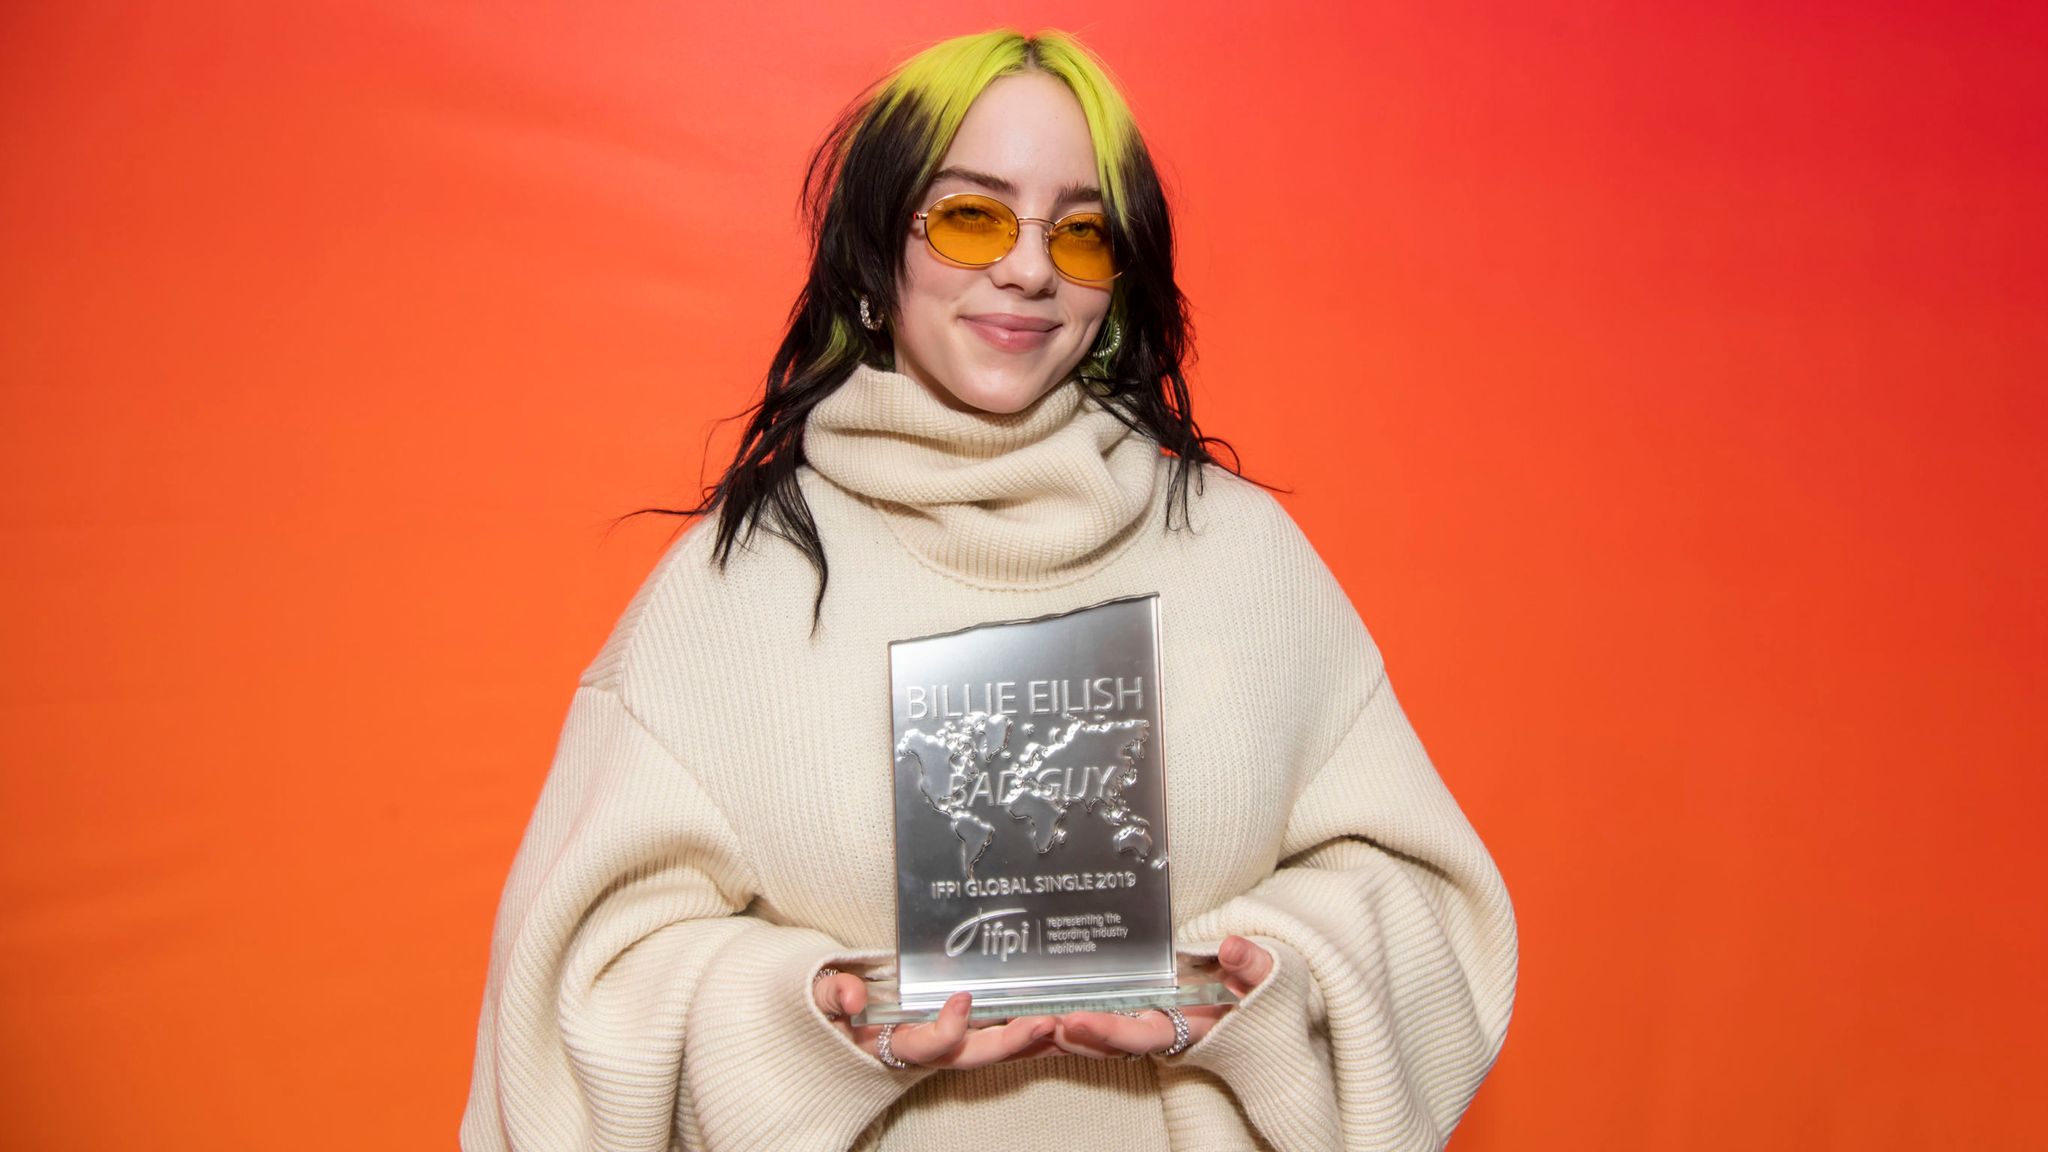 Billie Eilish Bad Guy Named Bestselling Global Digital Single Of